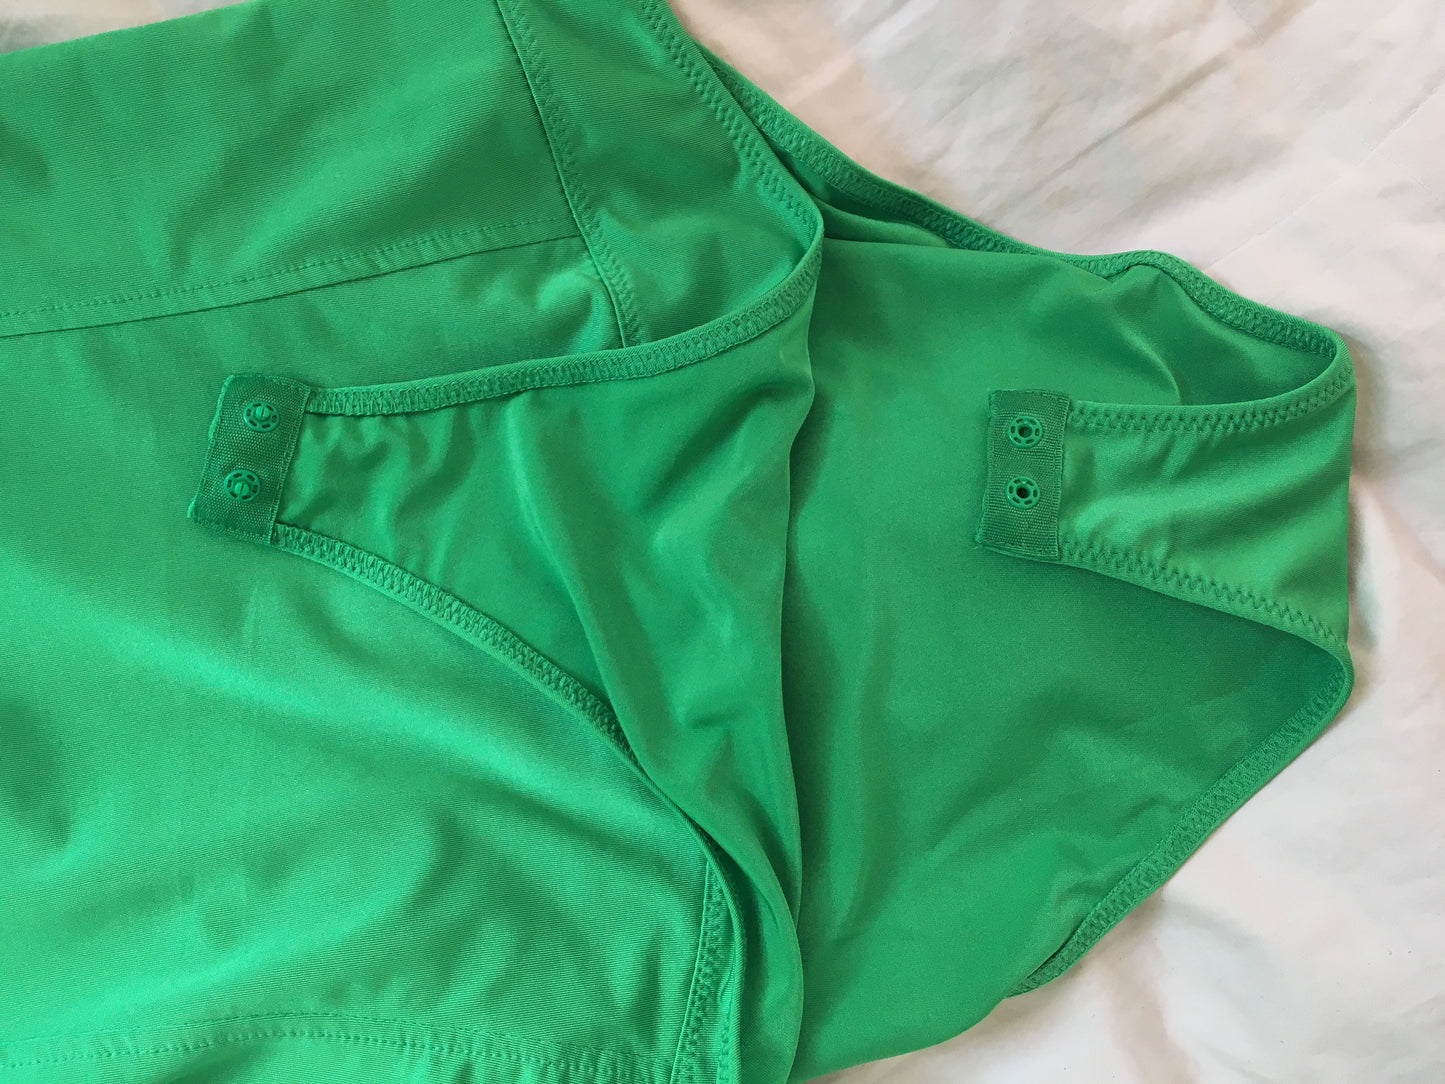 Green Bodysuit